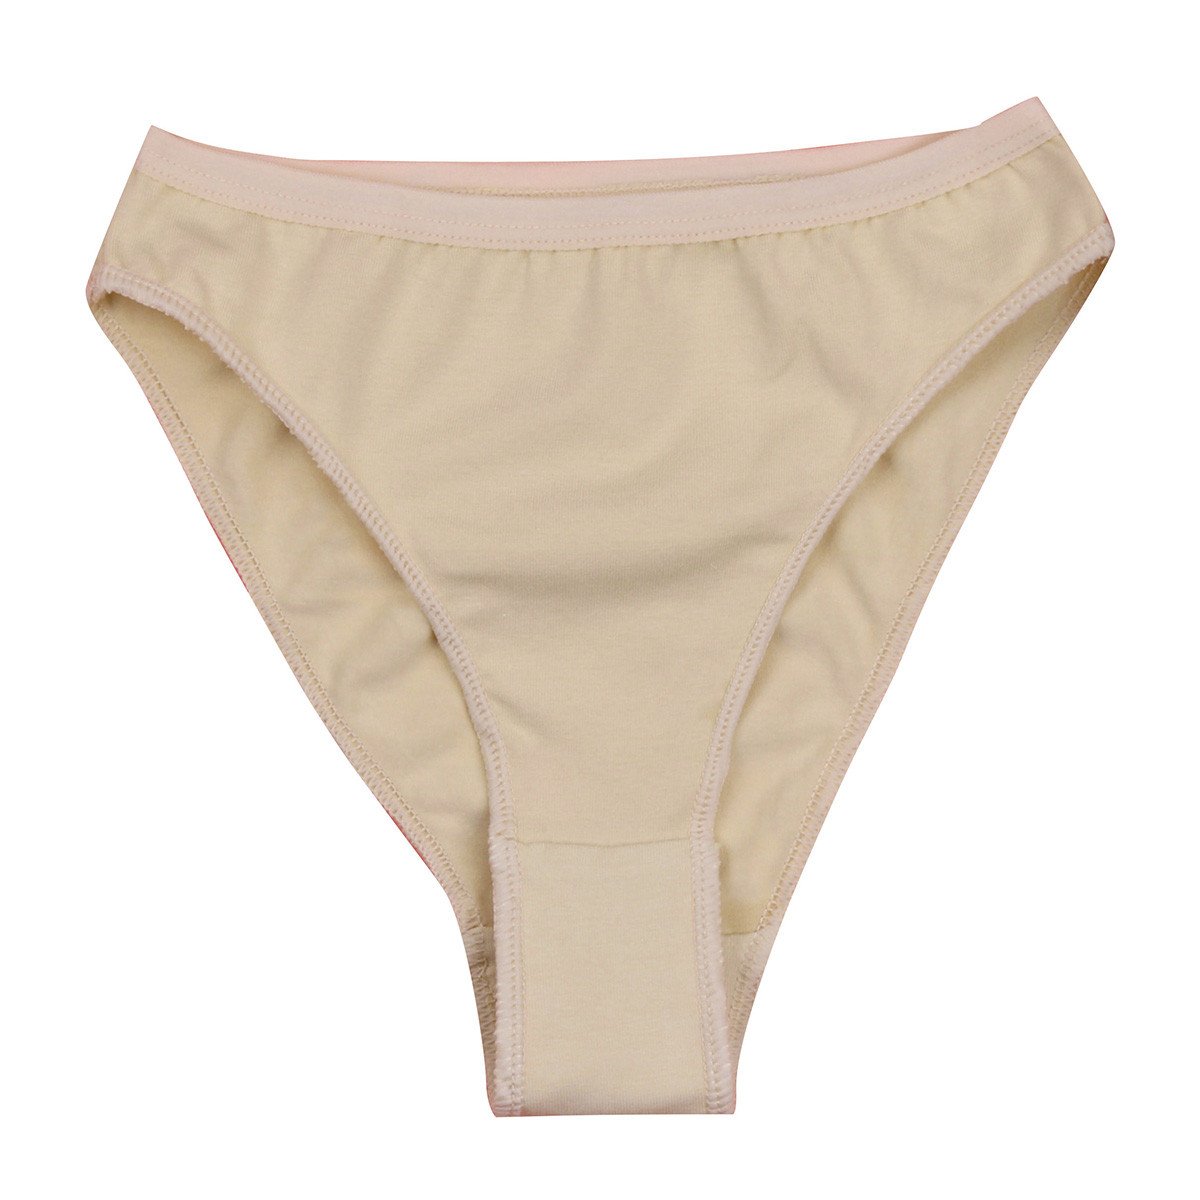 Freebily Girls Professional Ballet Dance Briefs Shorts Gymnastics High Cut Knickers  Underpants Underwear Nude 10-12